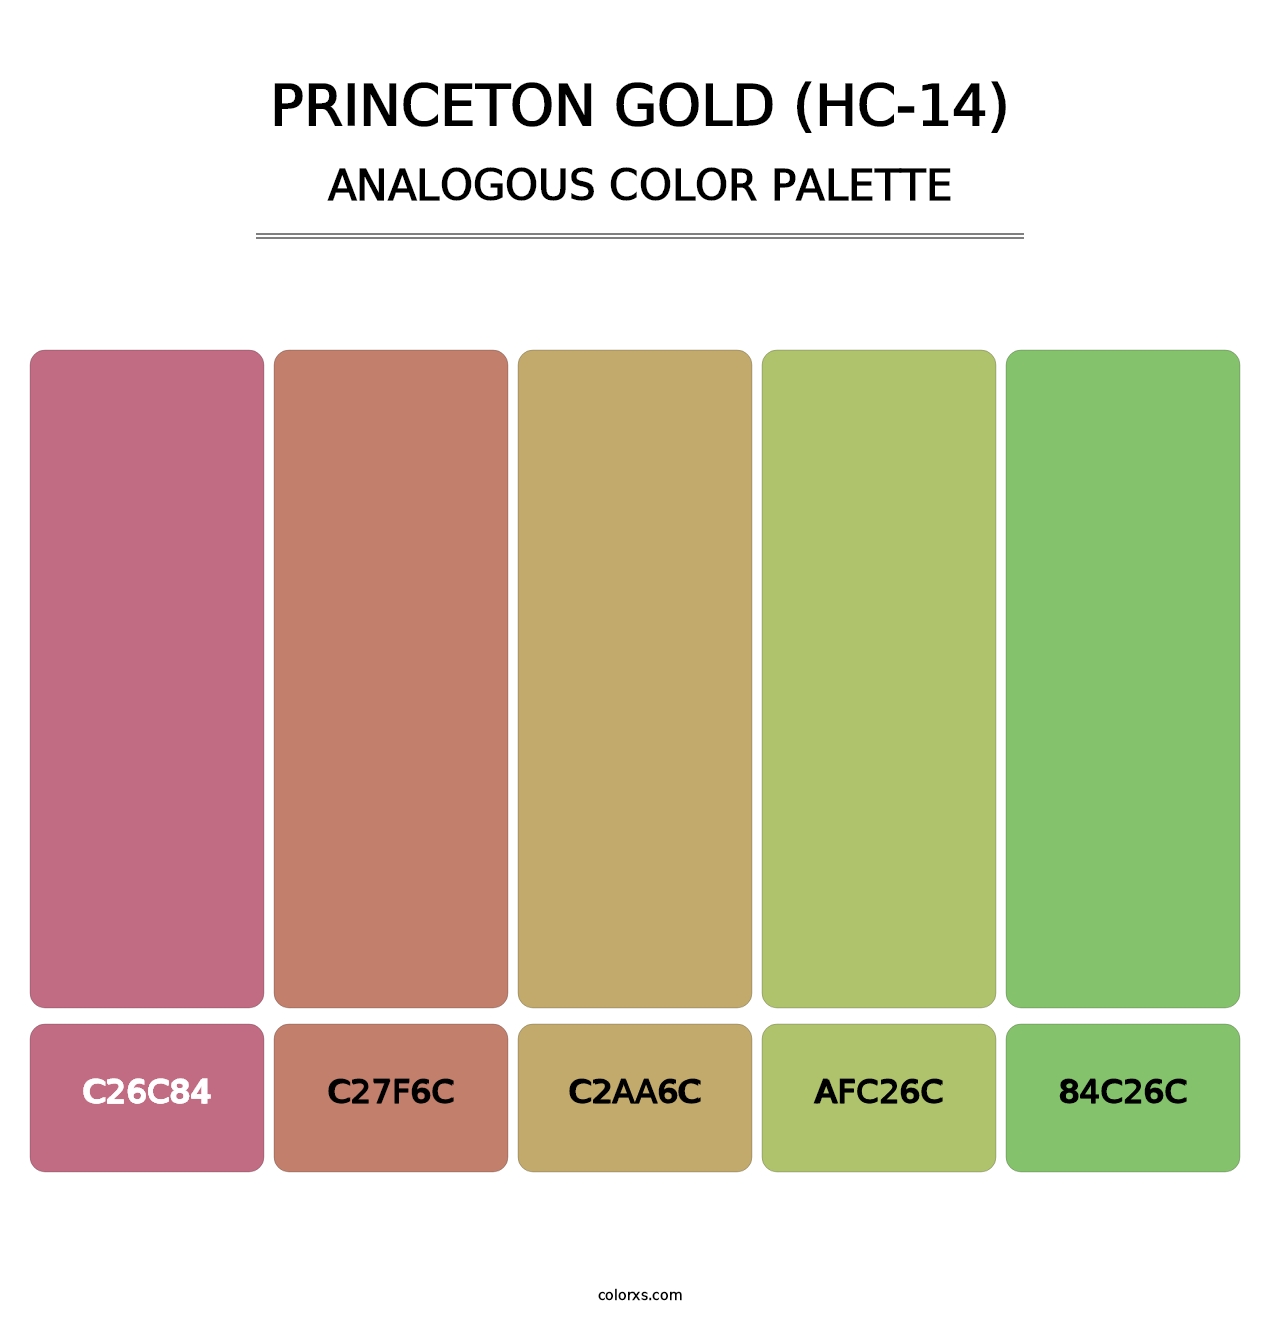 Princeton Gold (HC-14) - Analogous Color Palette